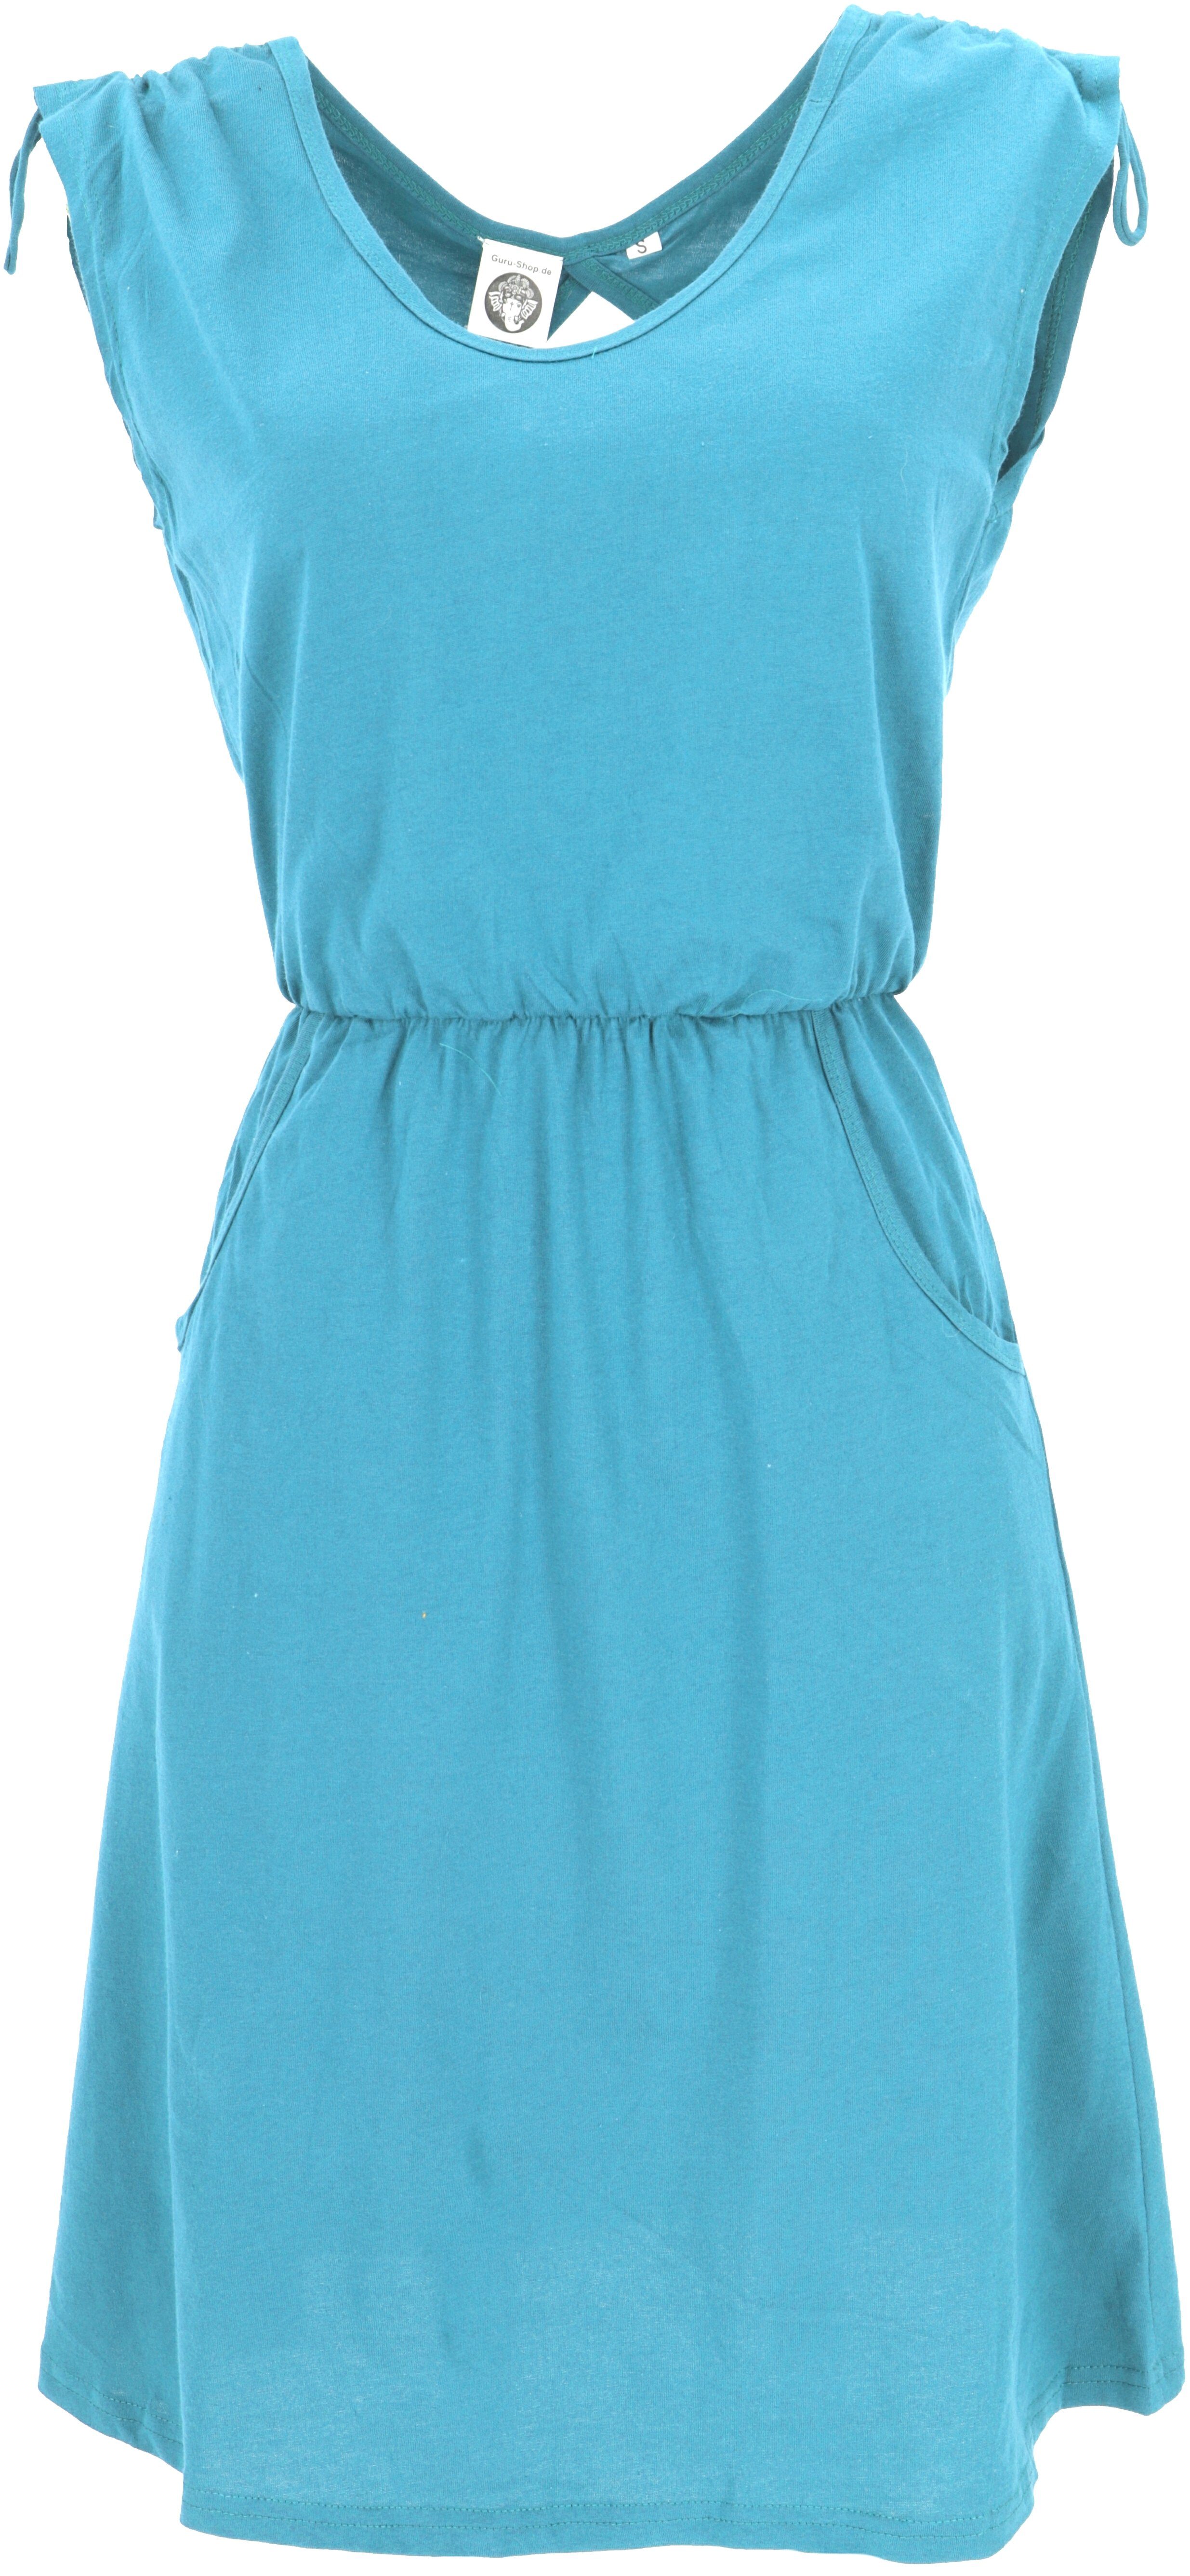 Guru-Shop Midikleid Ethno Minikleid, rückenfreies Kleid aus.. alternative Bekleidung blau